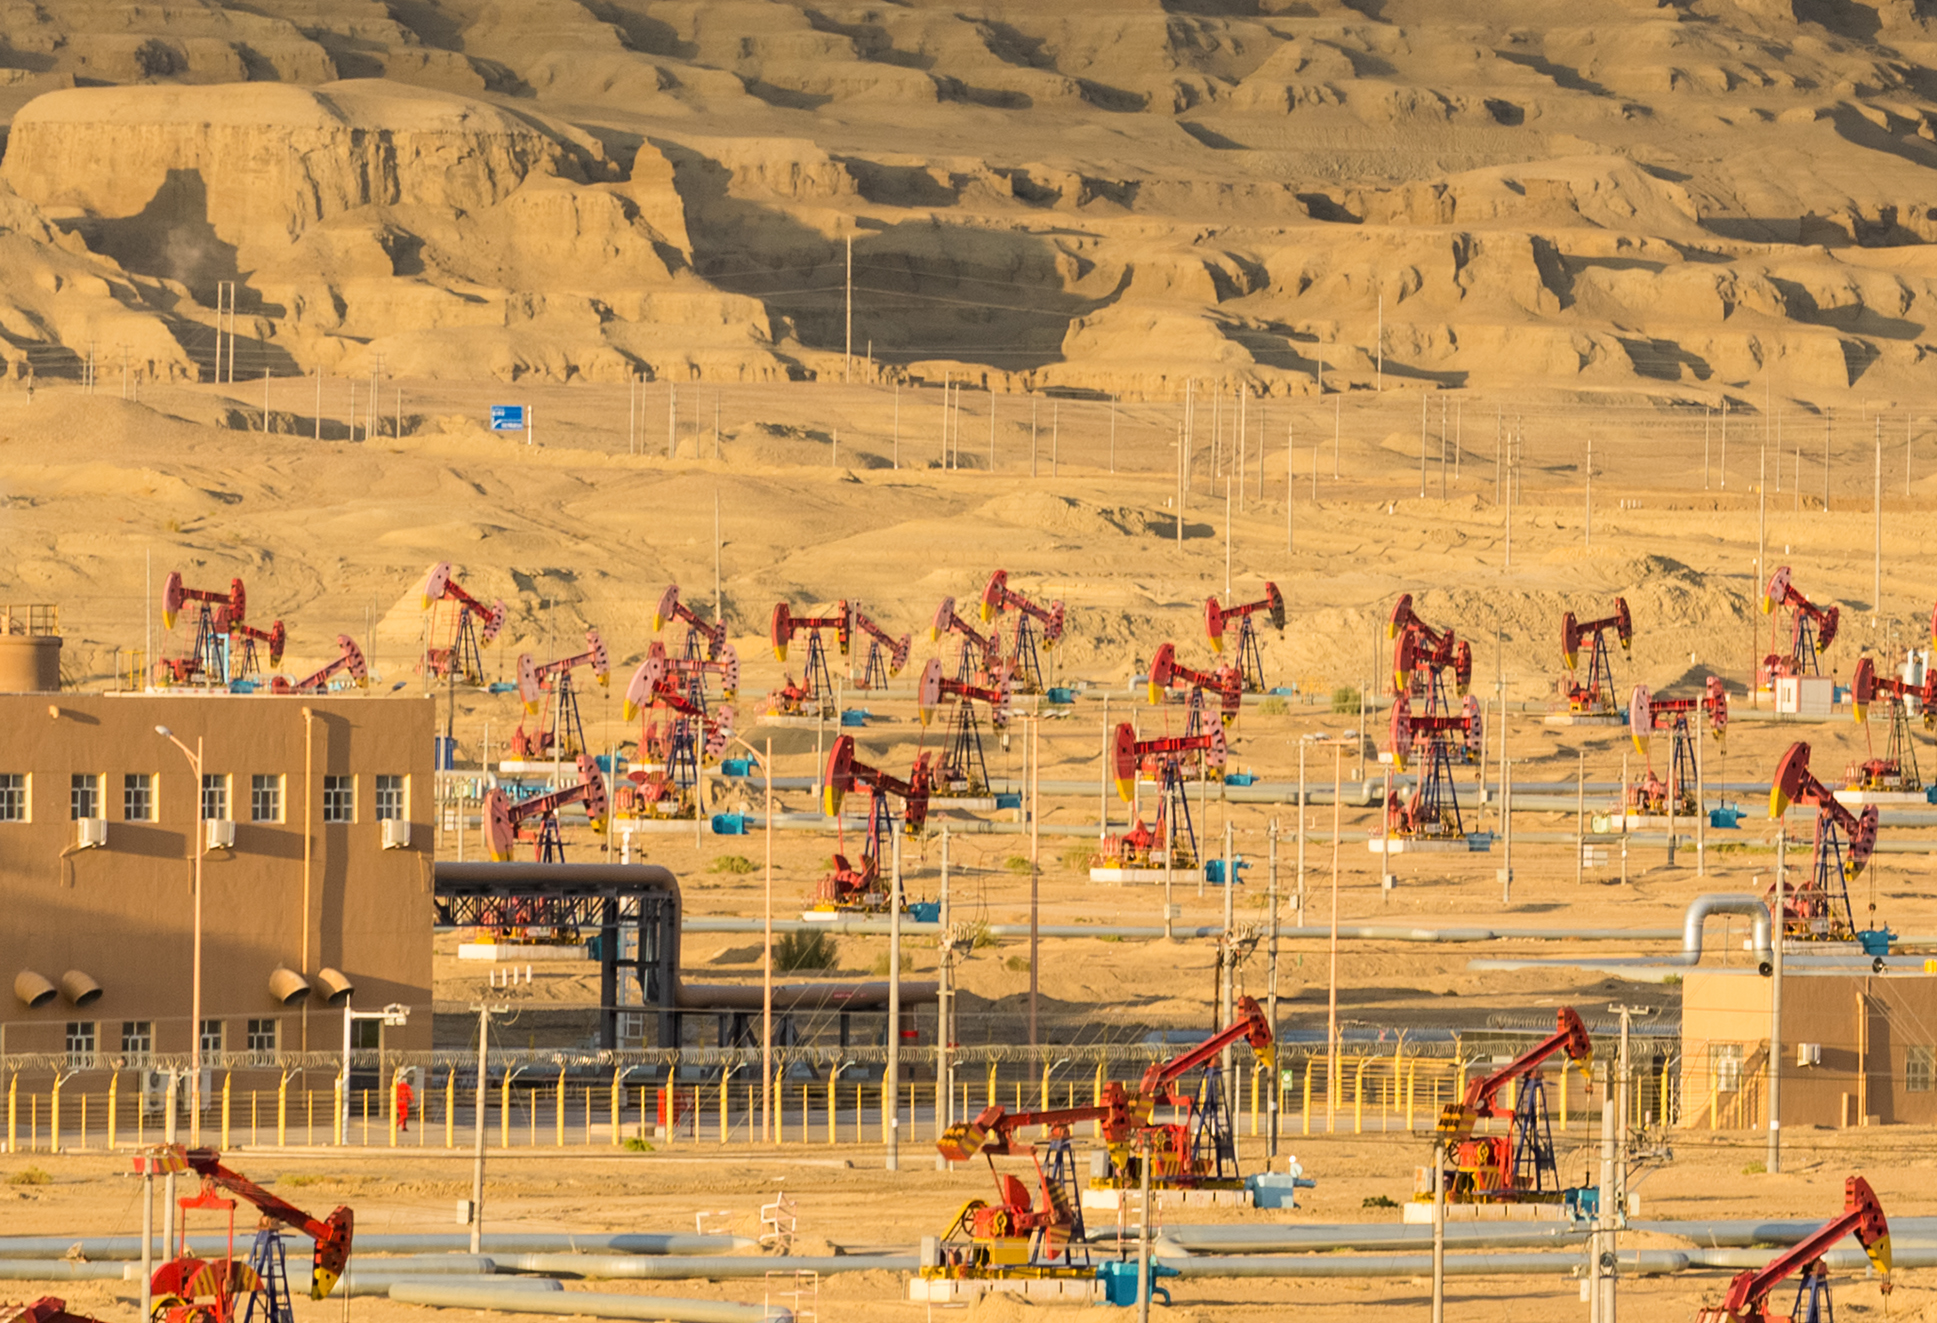 Large working oilfield